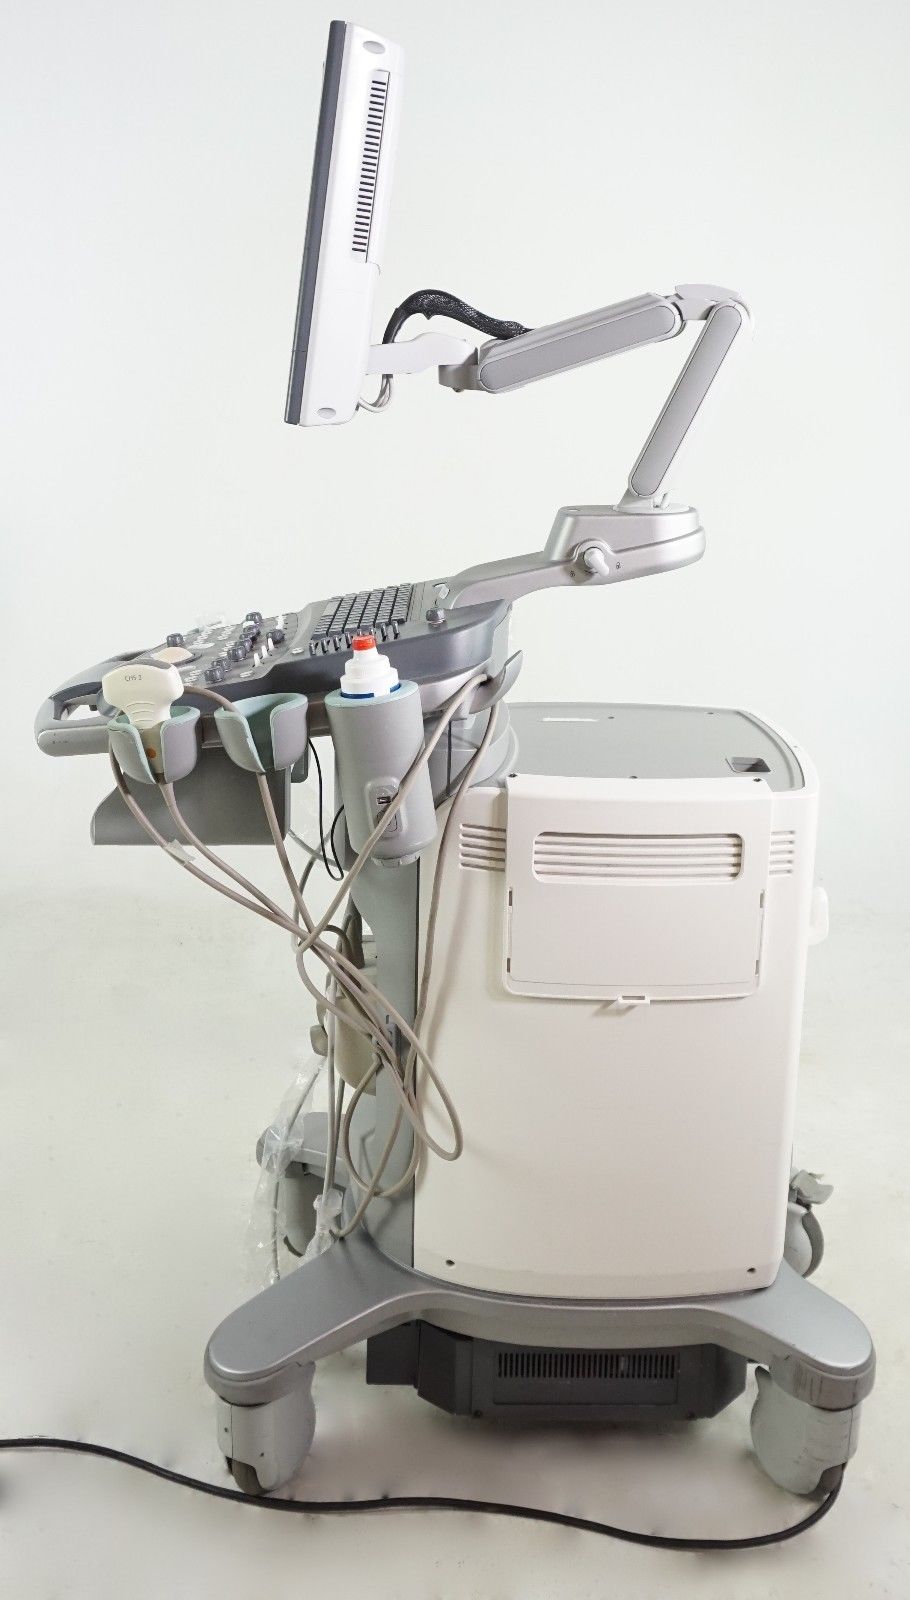 SIEMENS ACUSON X300 PREMIUM EDITION DIAGNOSTIC ULTRASOUND SYSTEM DIAGNOSTIC ULTRASOUND MACHINES FOR SALE